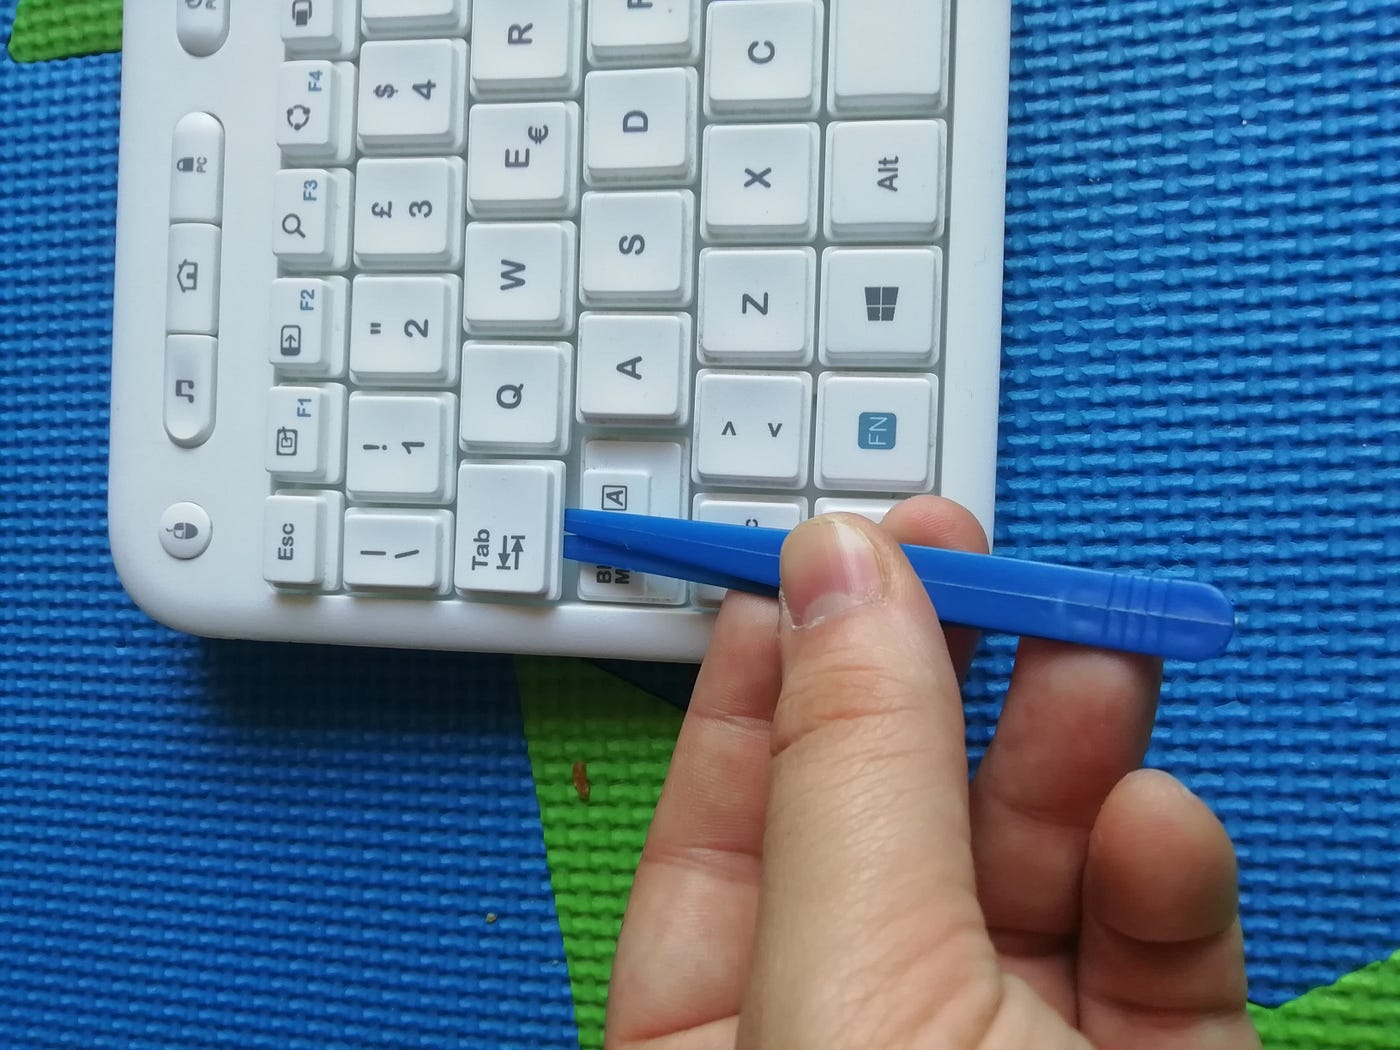 Clean the keys of Logitech k400r keyboard | by Nicola Landro | Medium